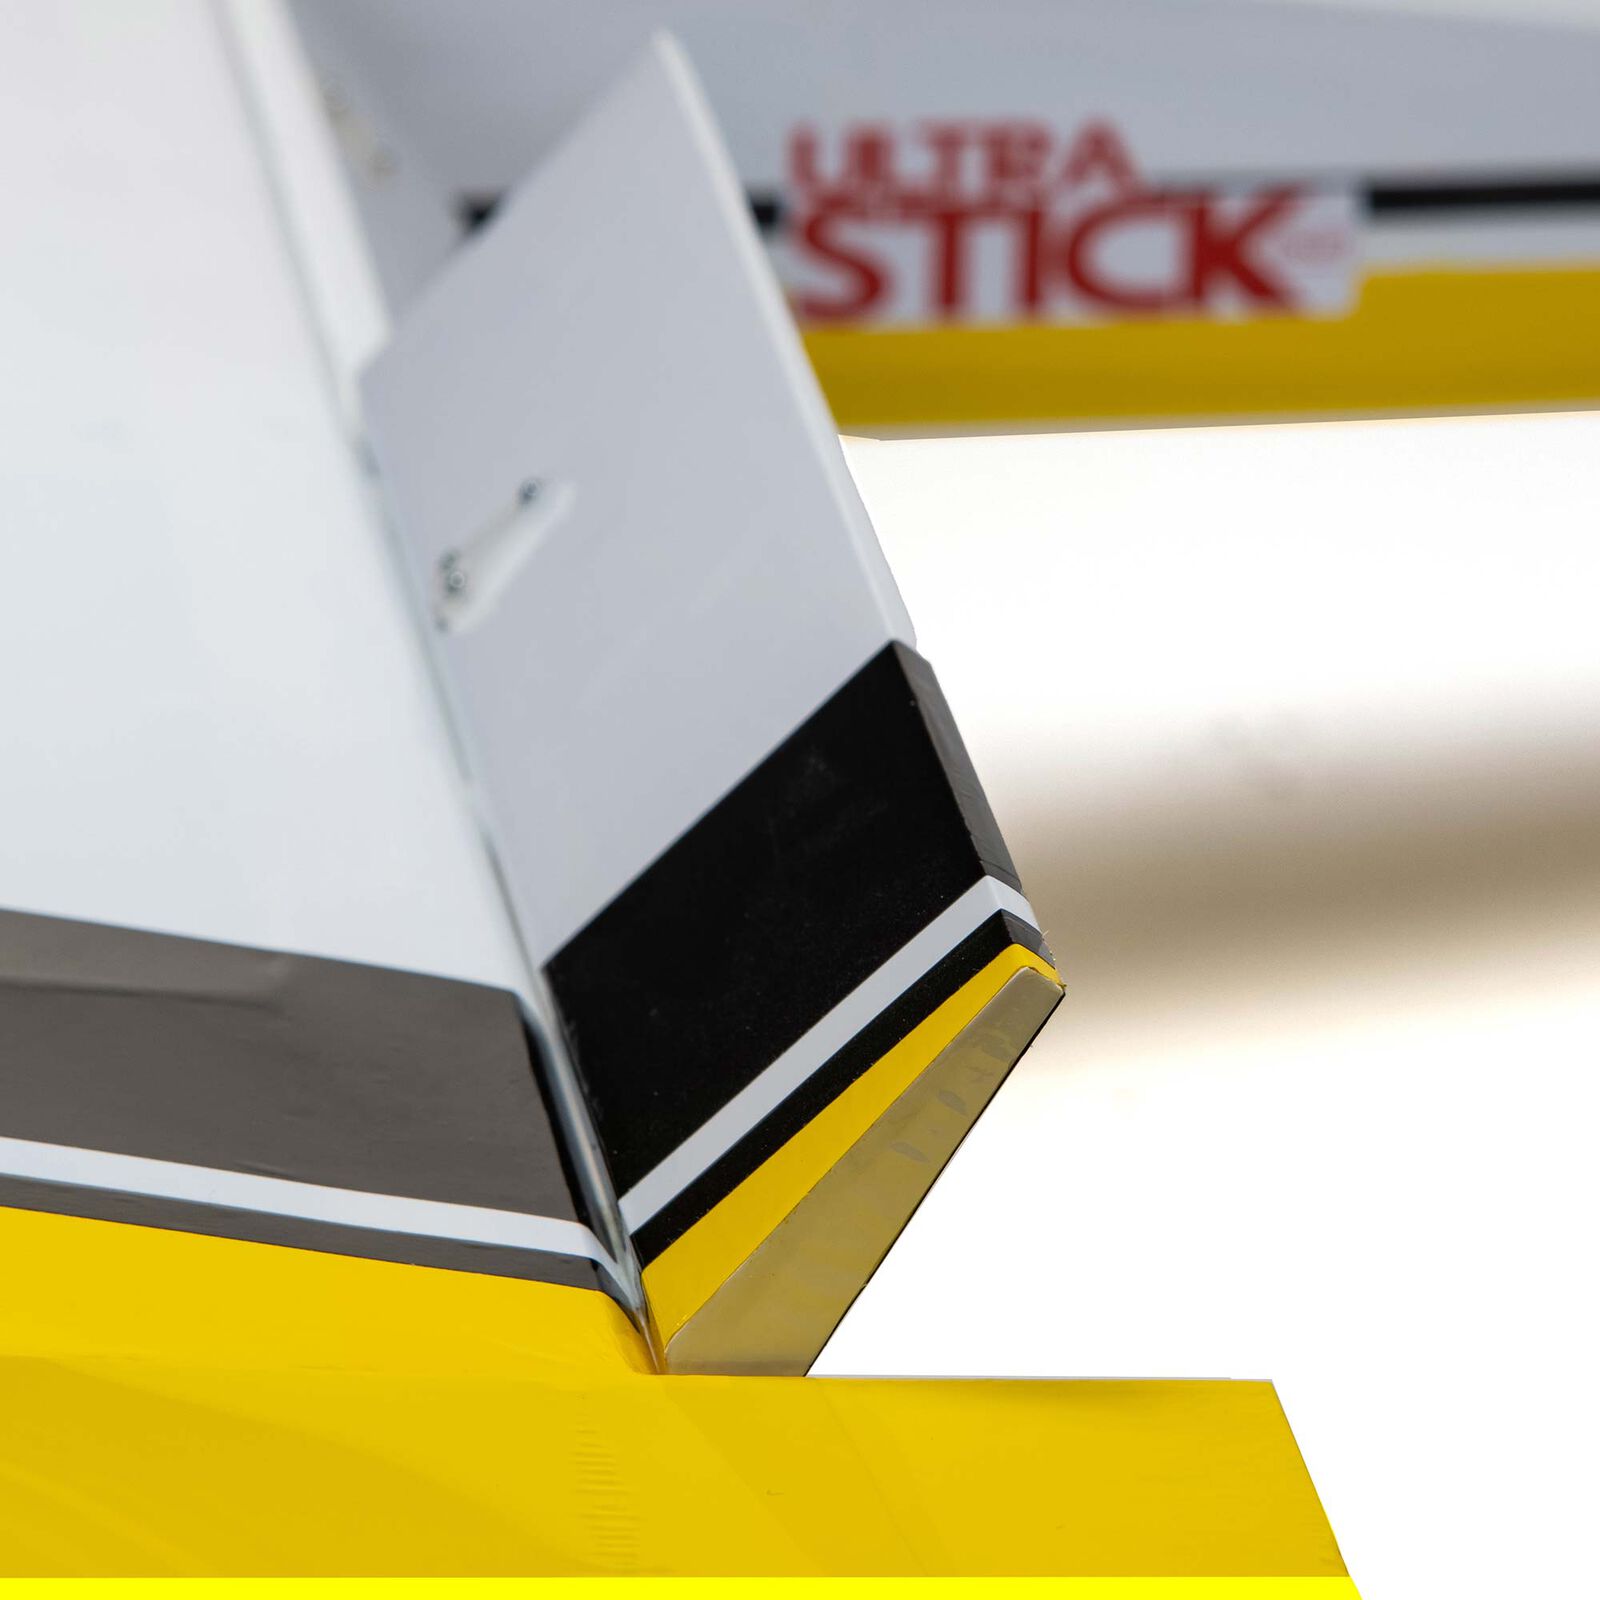 Ultra Stick 60